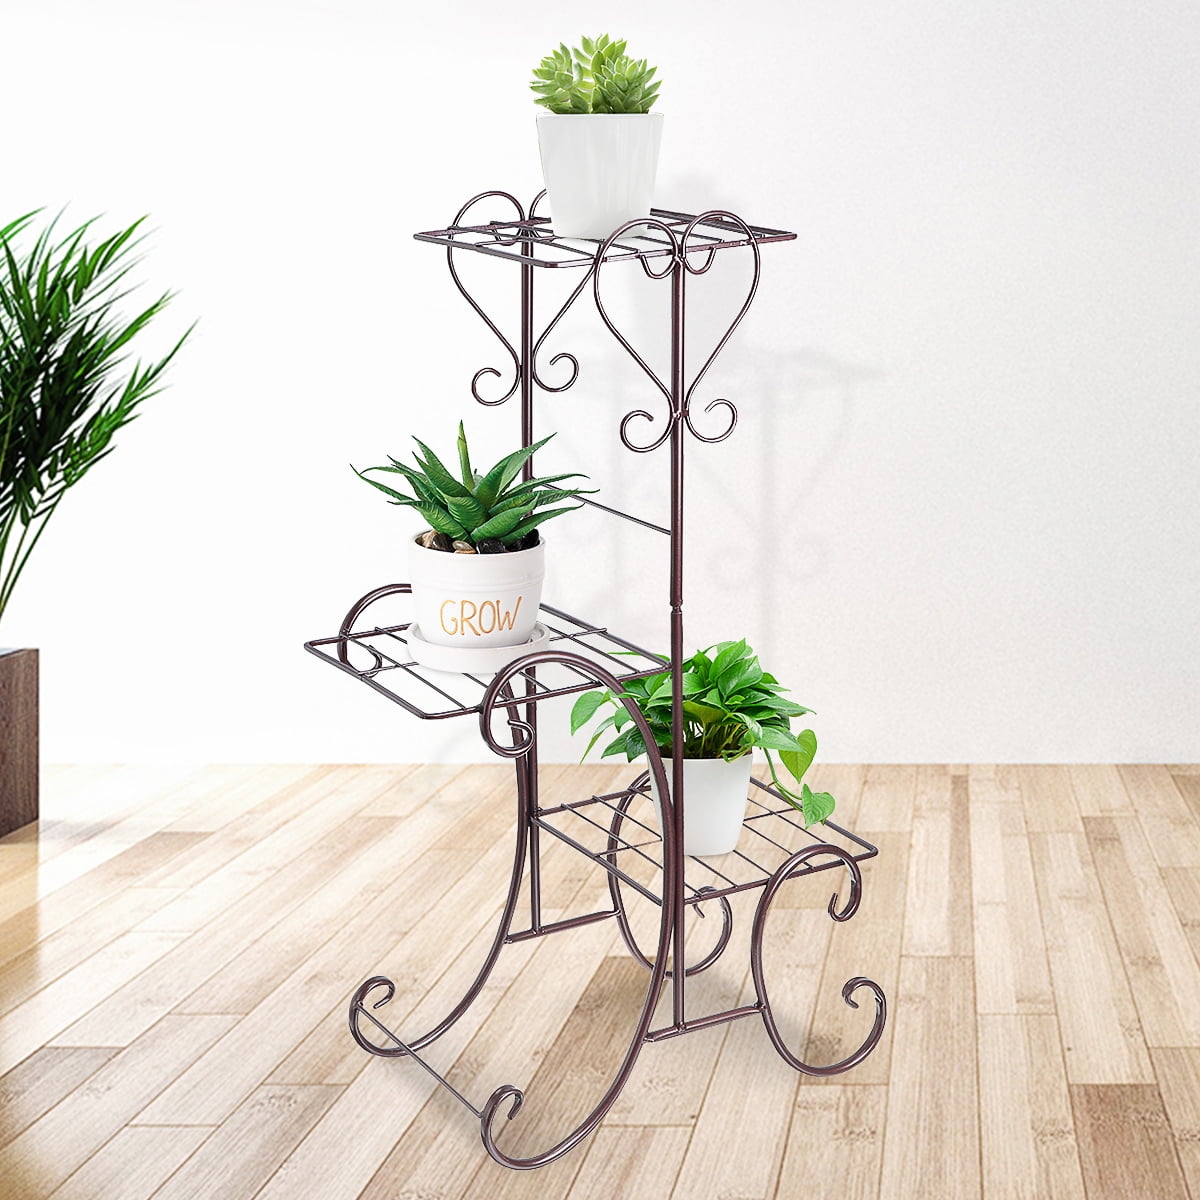 Details about   Metal Plant Pot Stand Holder Indoor/Outdoor Garden Decor Flower-Planter Display 